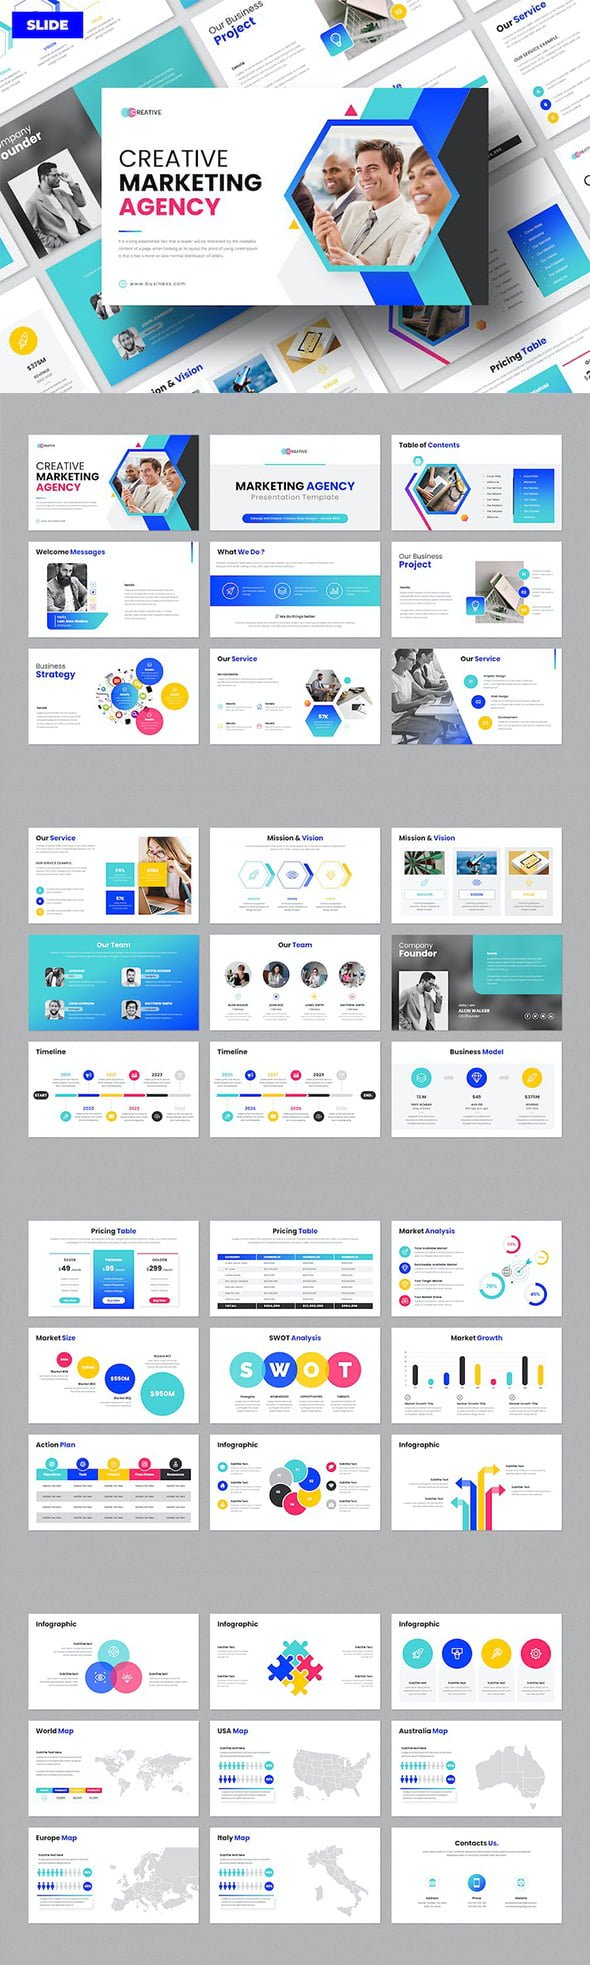 Creative Marketing Agency Google Slides Template - A57QX2X